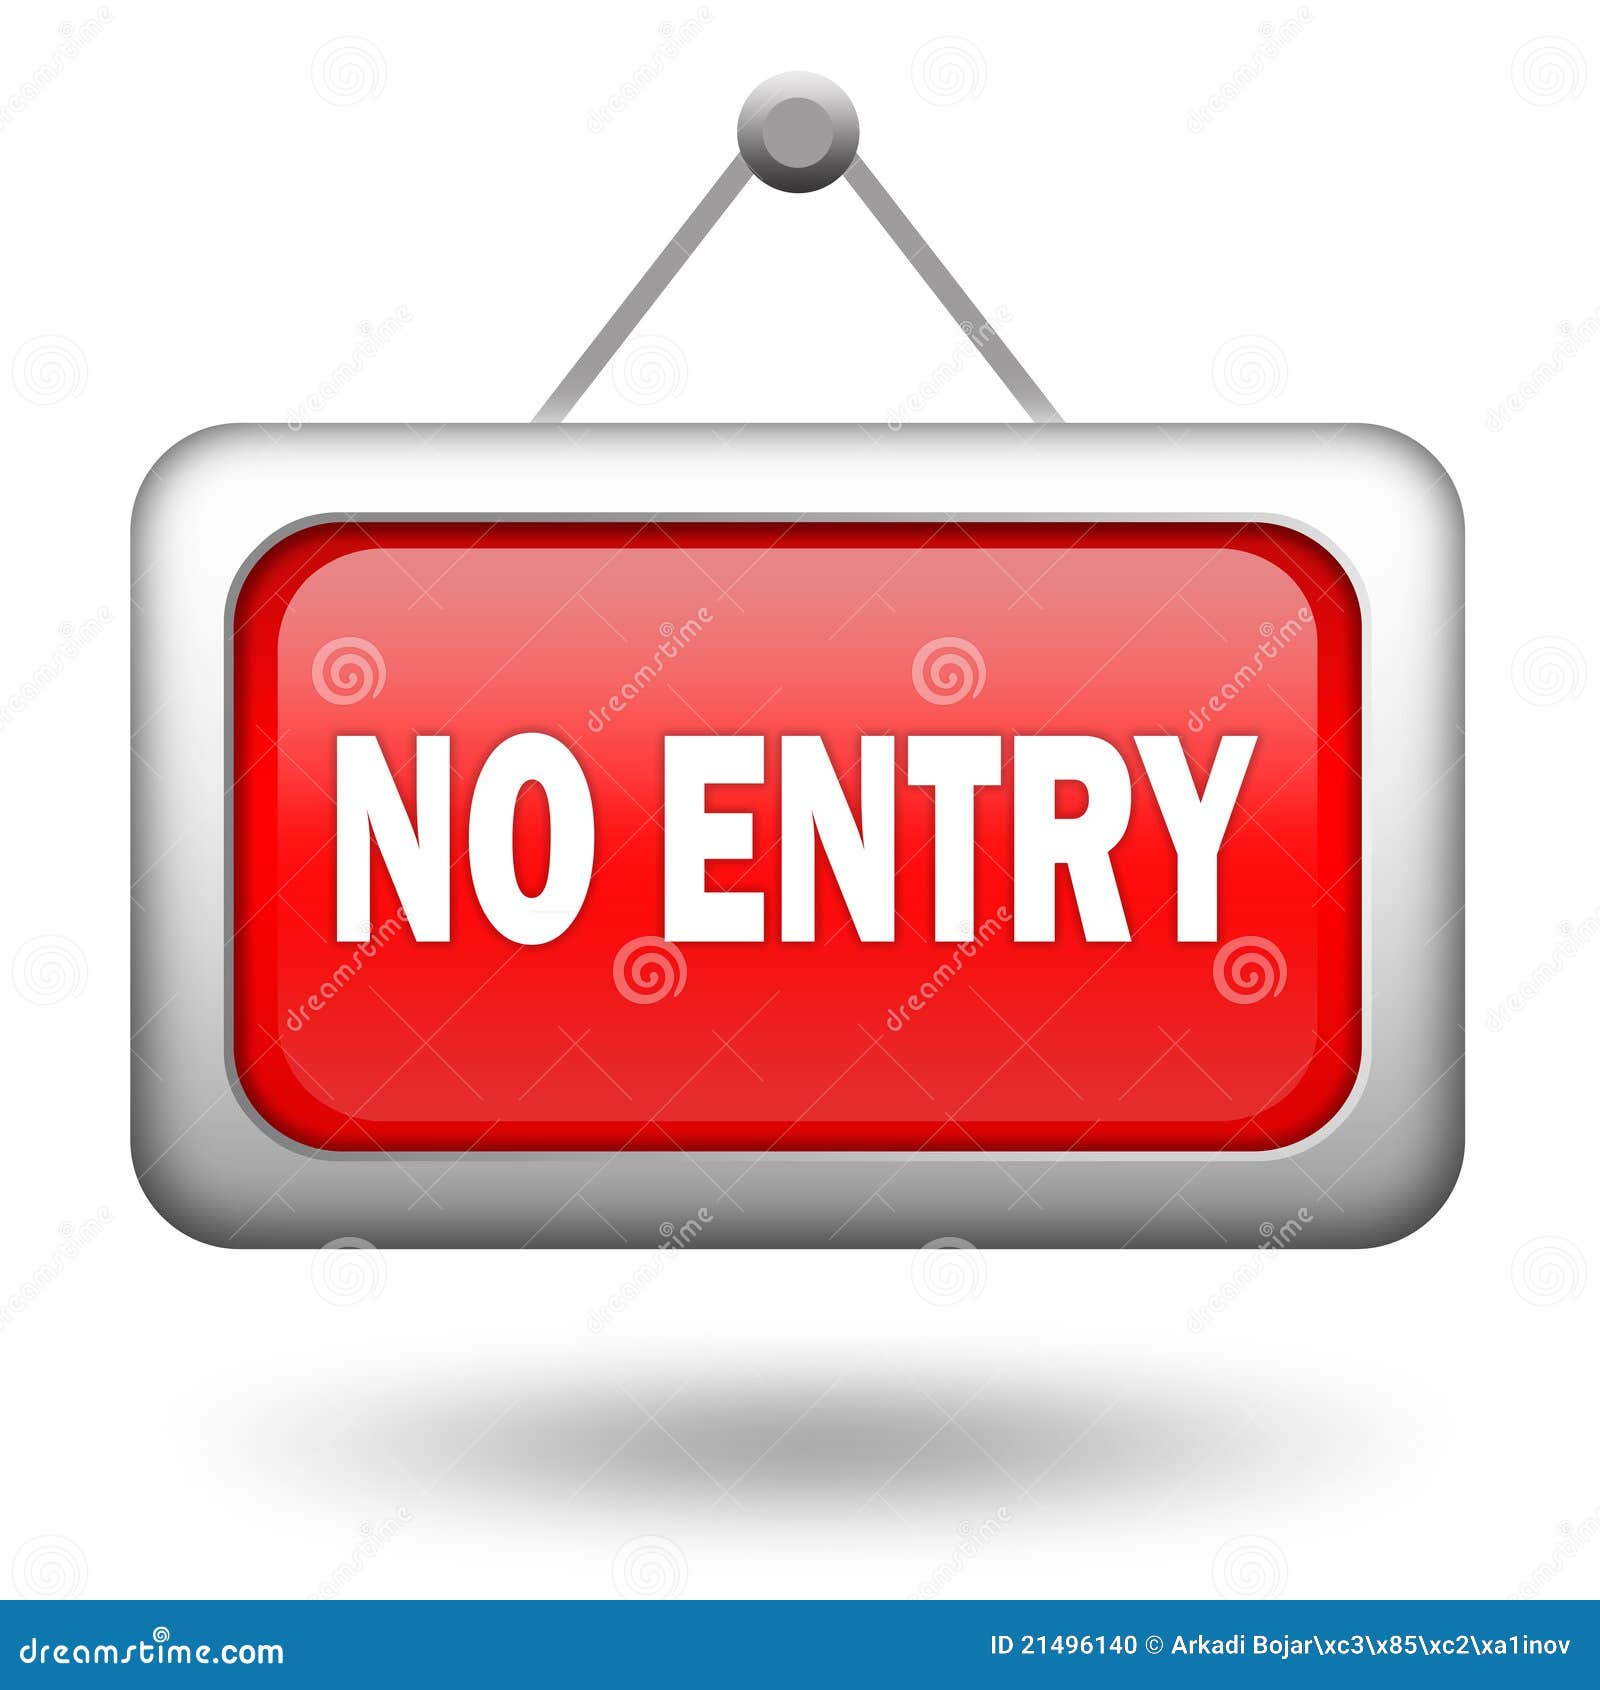 No entry sign stock illustration. Illustration of permission - 21496140